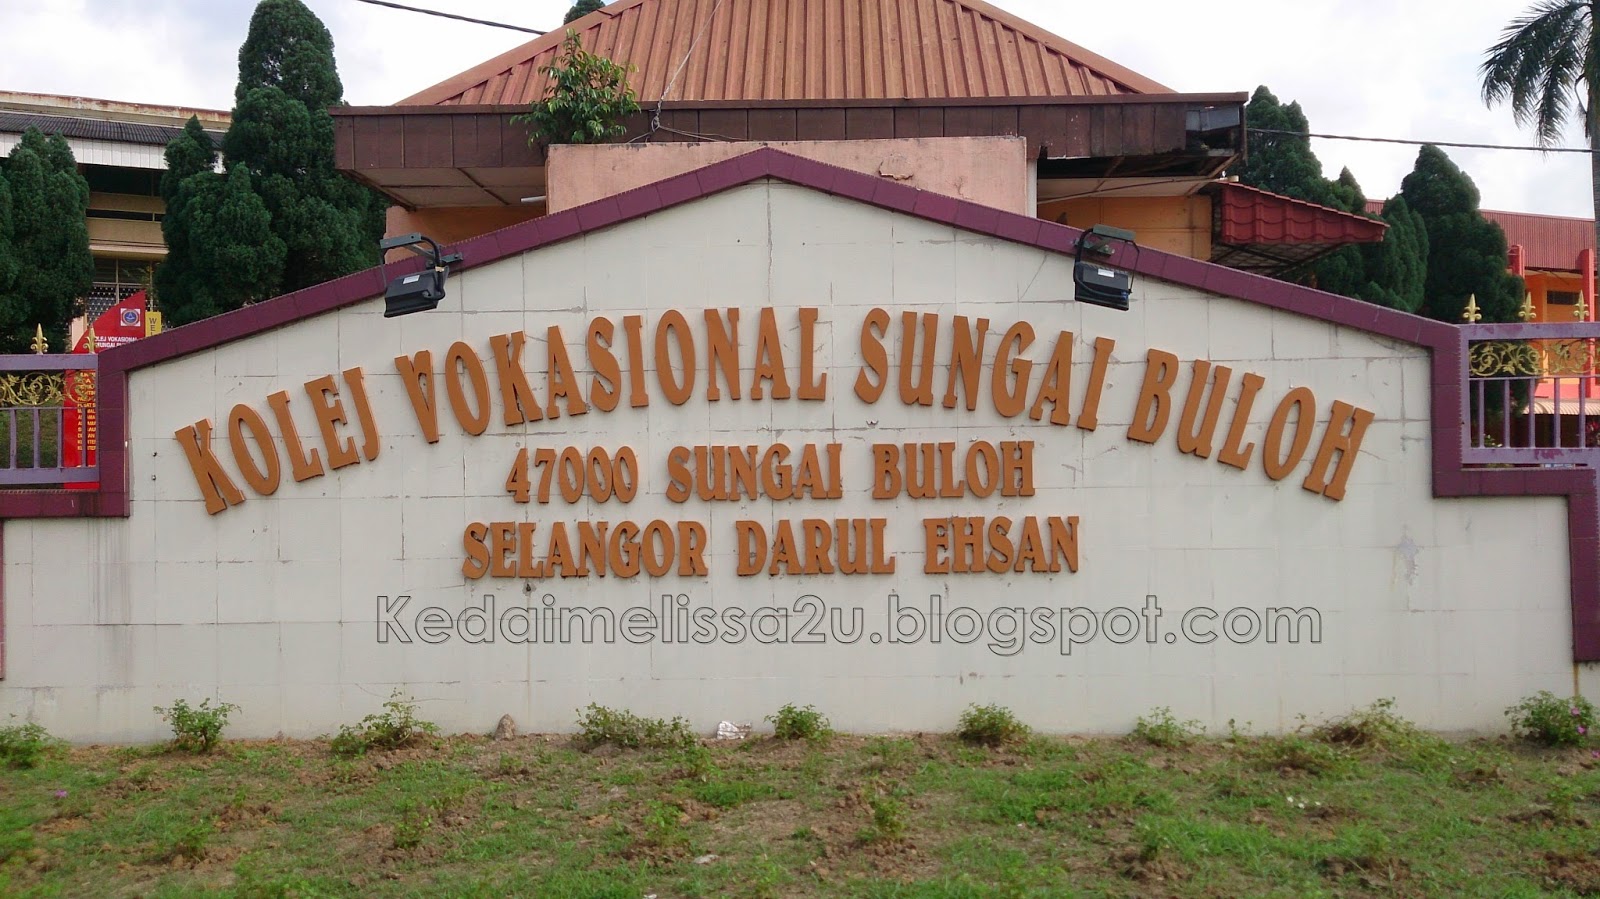  Kolej  Vokasional  Hulu Selangor Perokok n